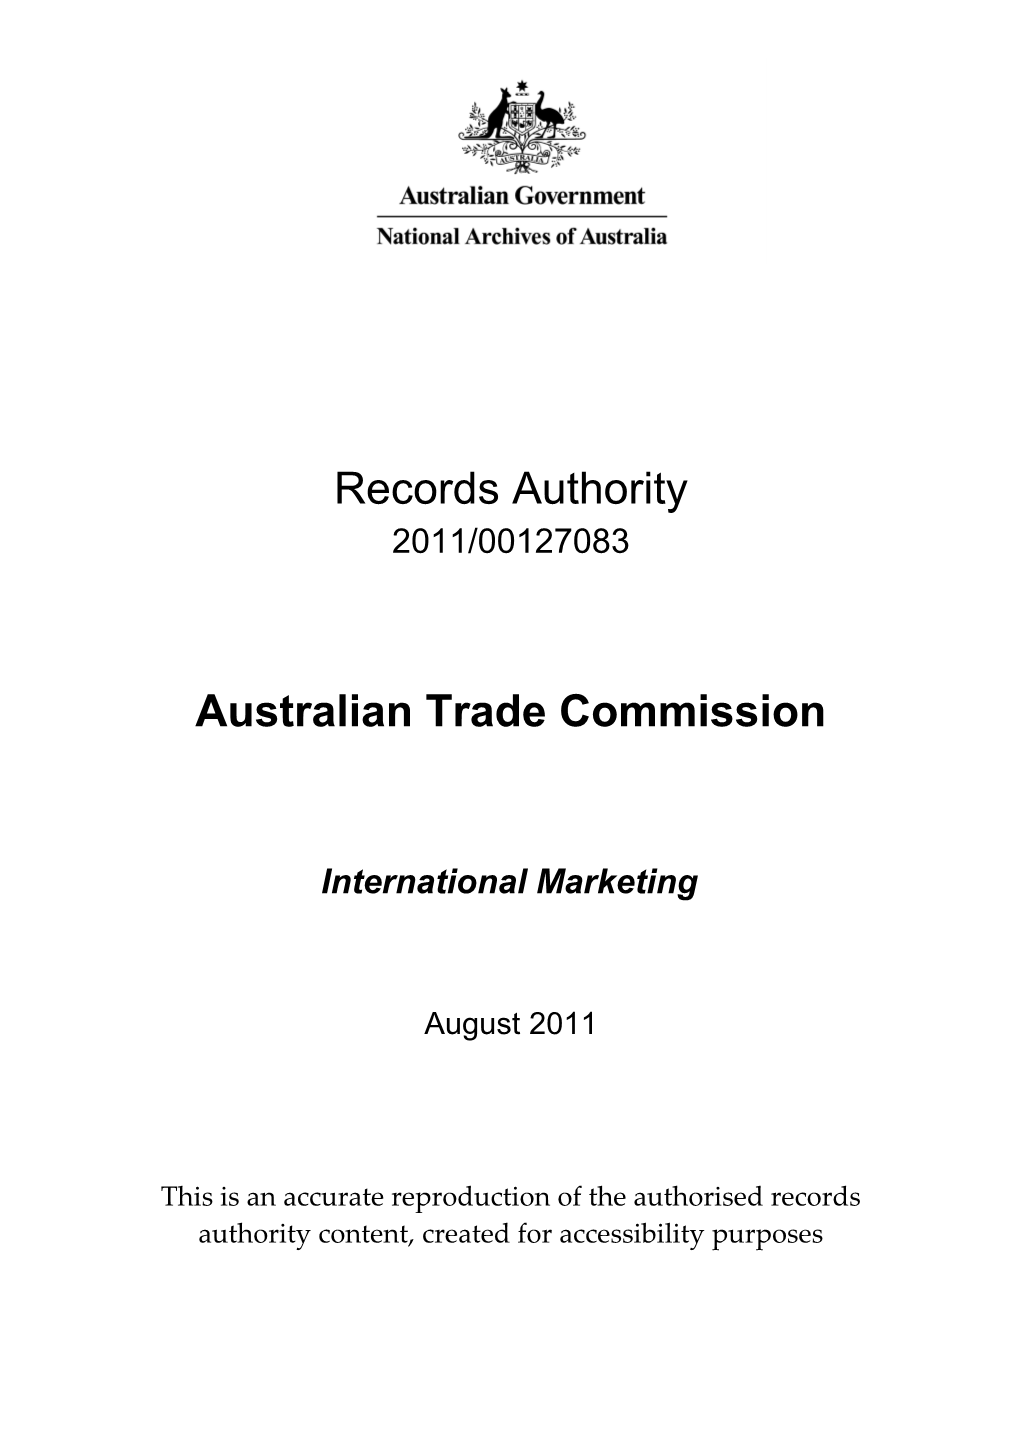 Australian Trade Commission 2011/00127083